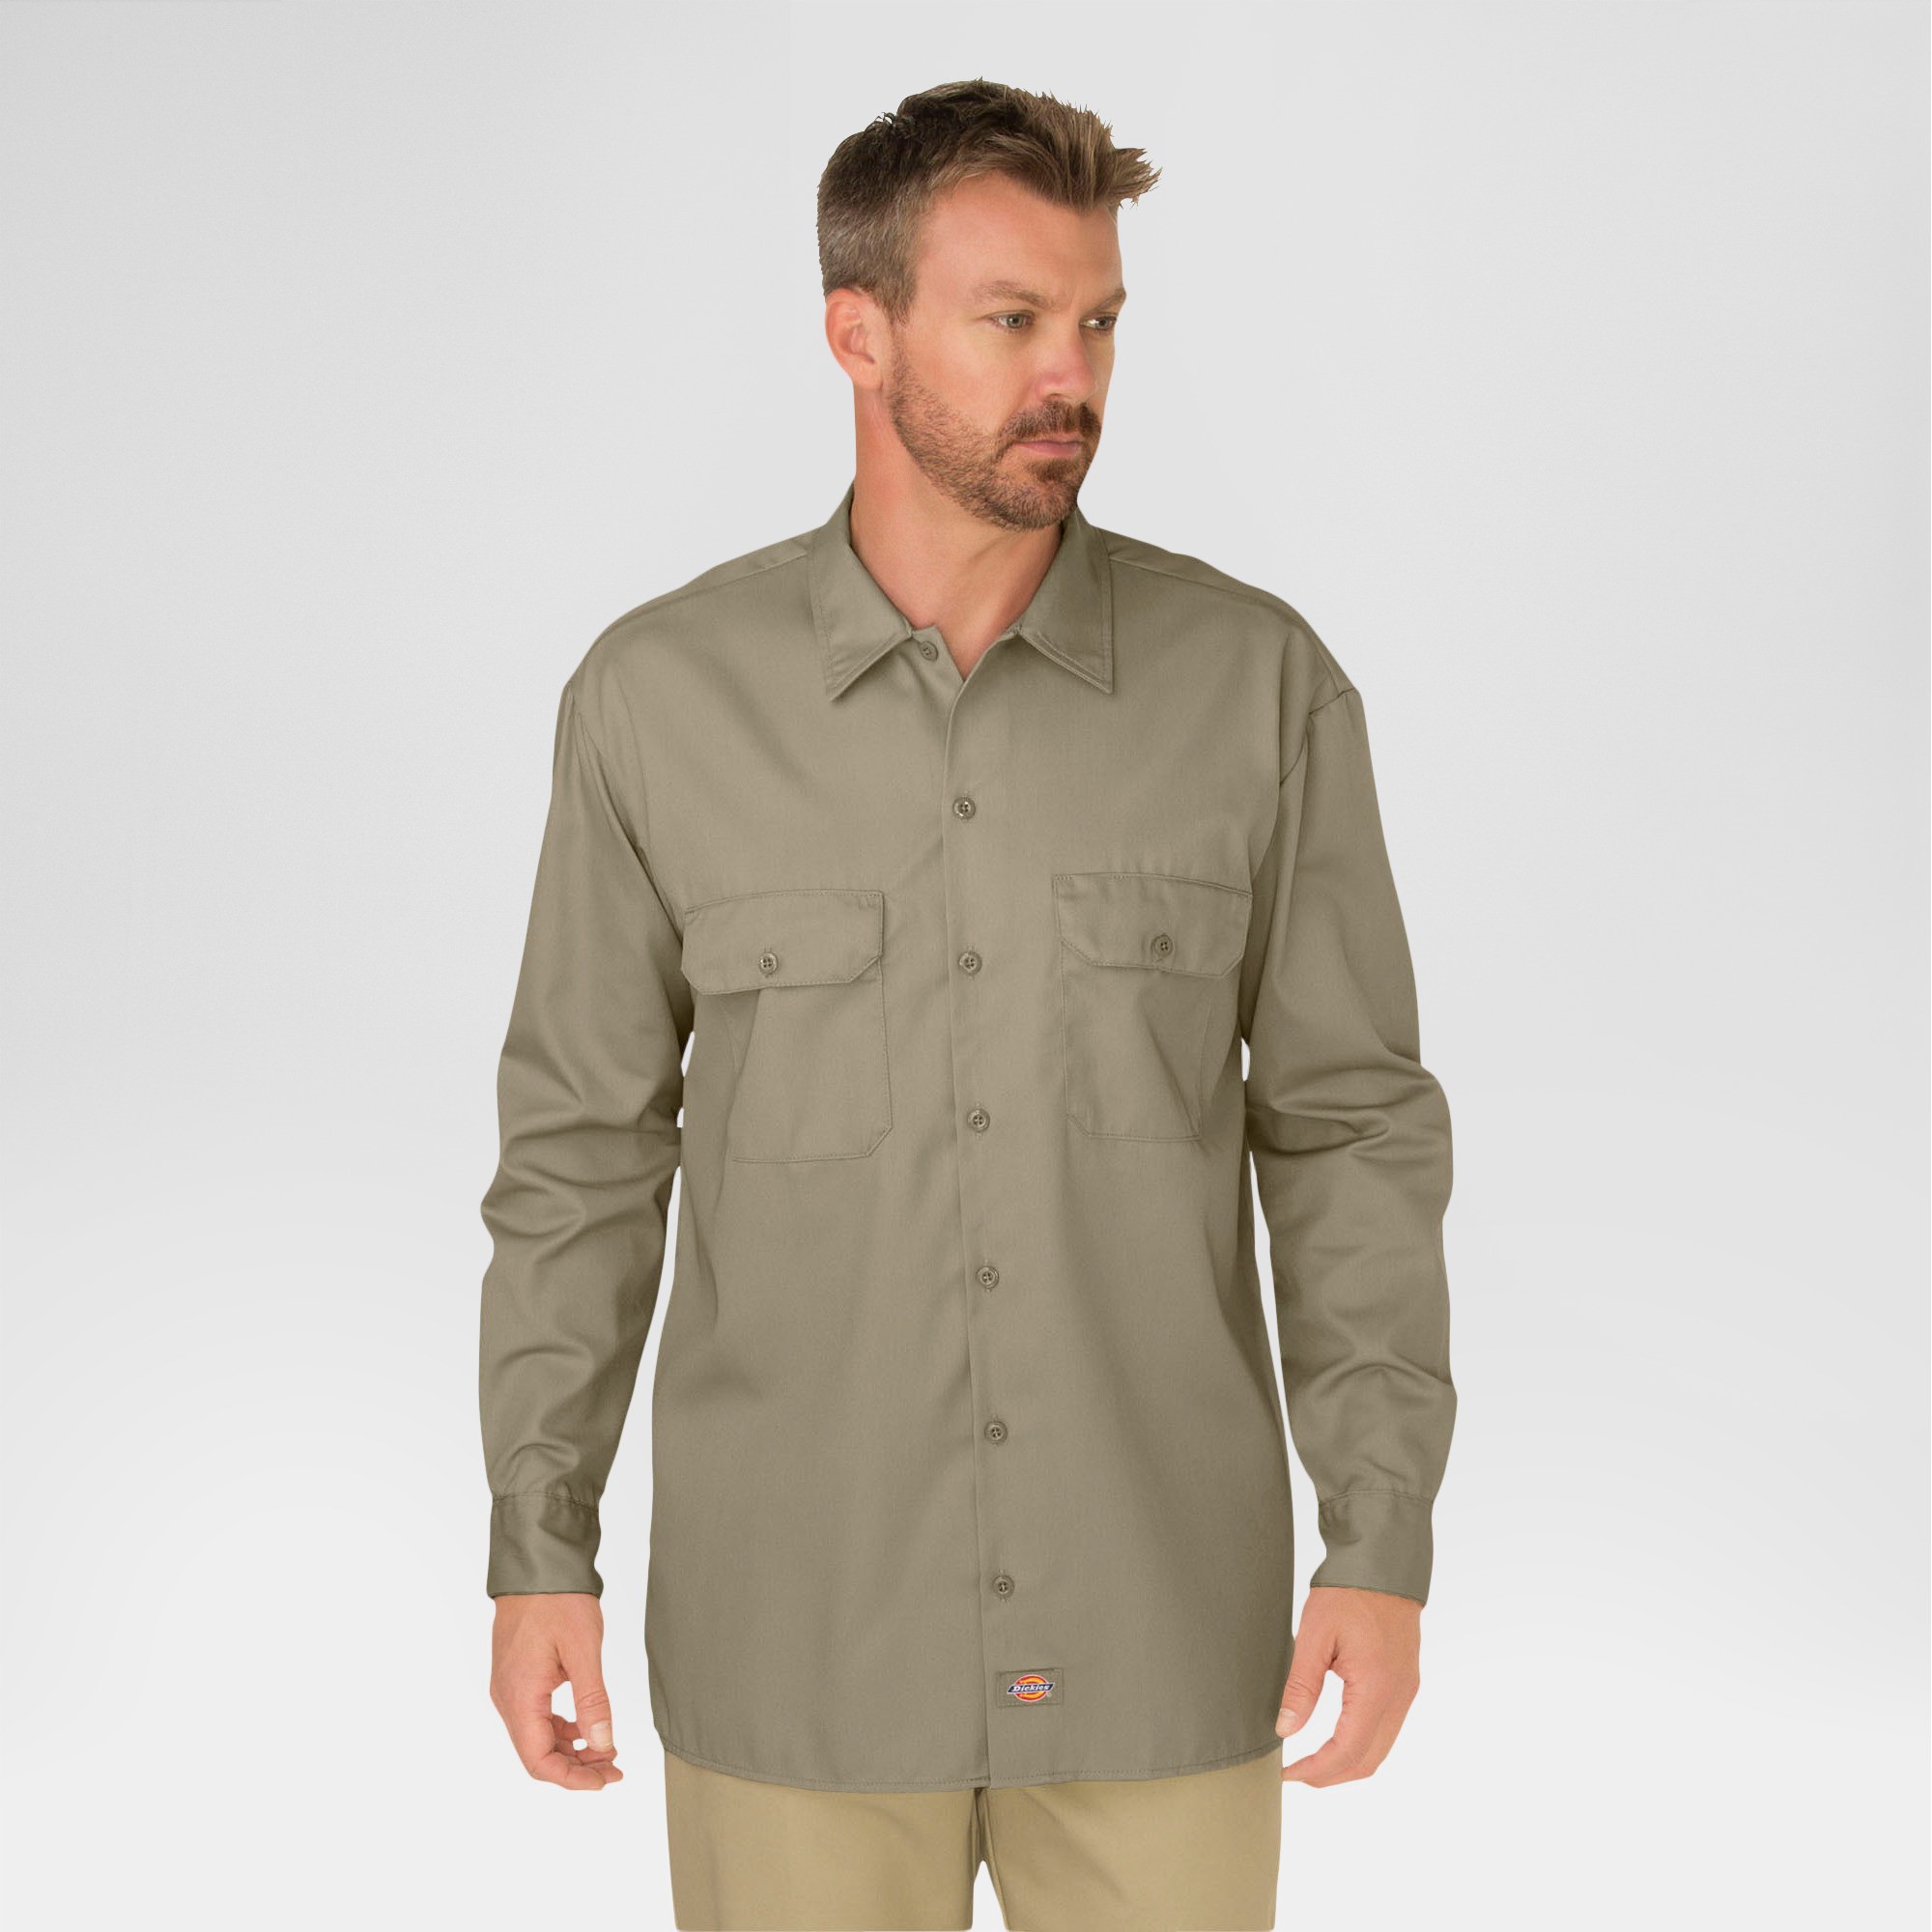 Dickies Men's Original Fit Twill Long Sleeve Shirt-Khaki L, Size: Large, Green